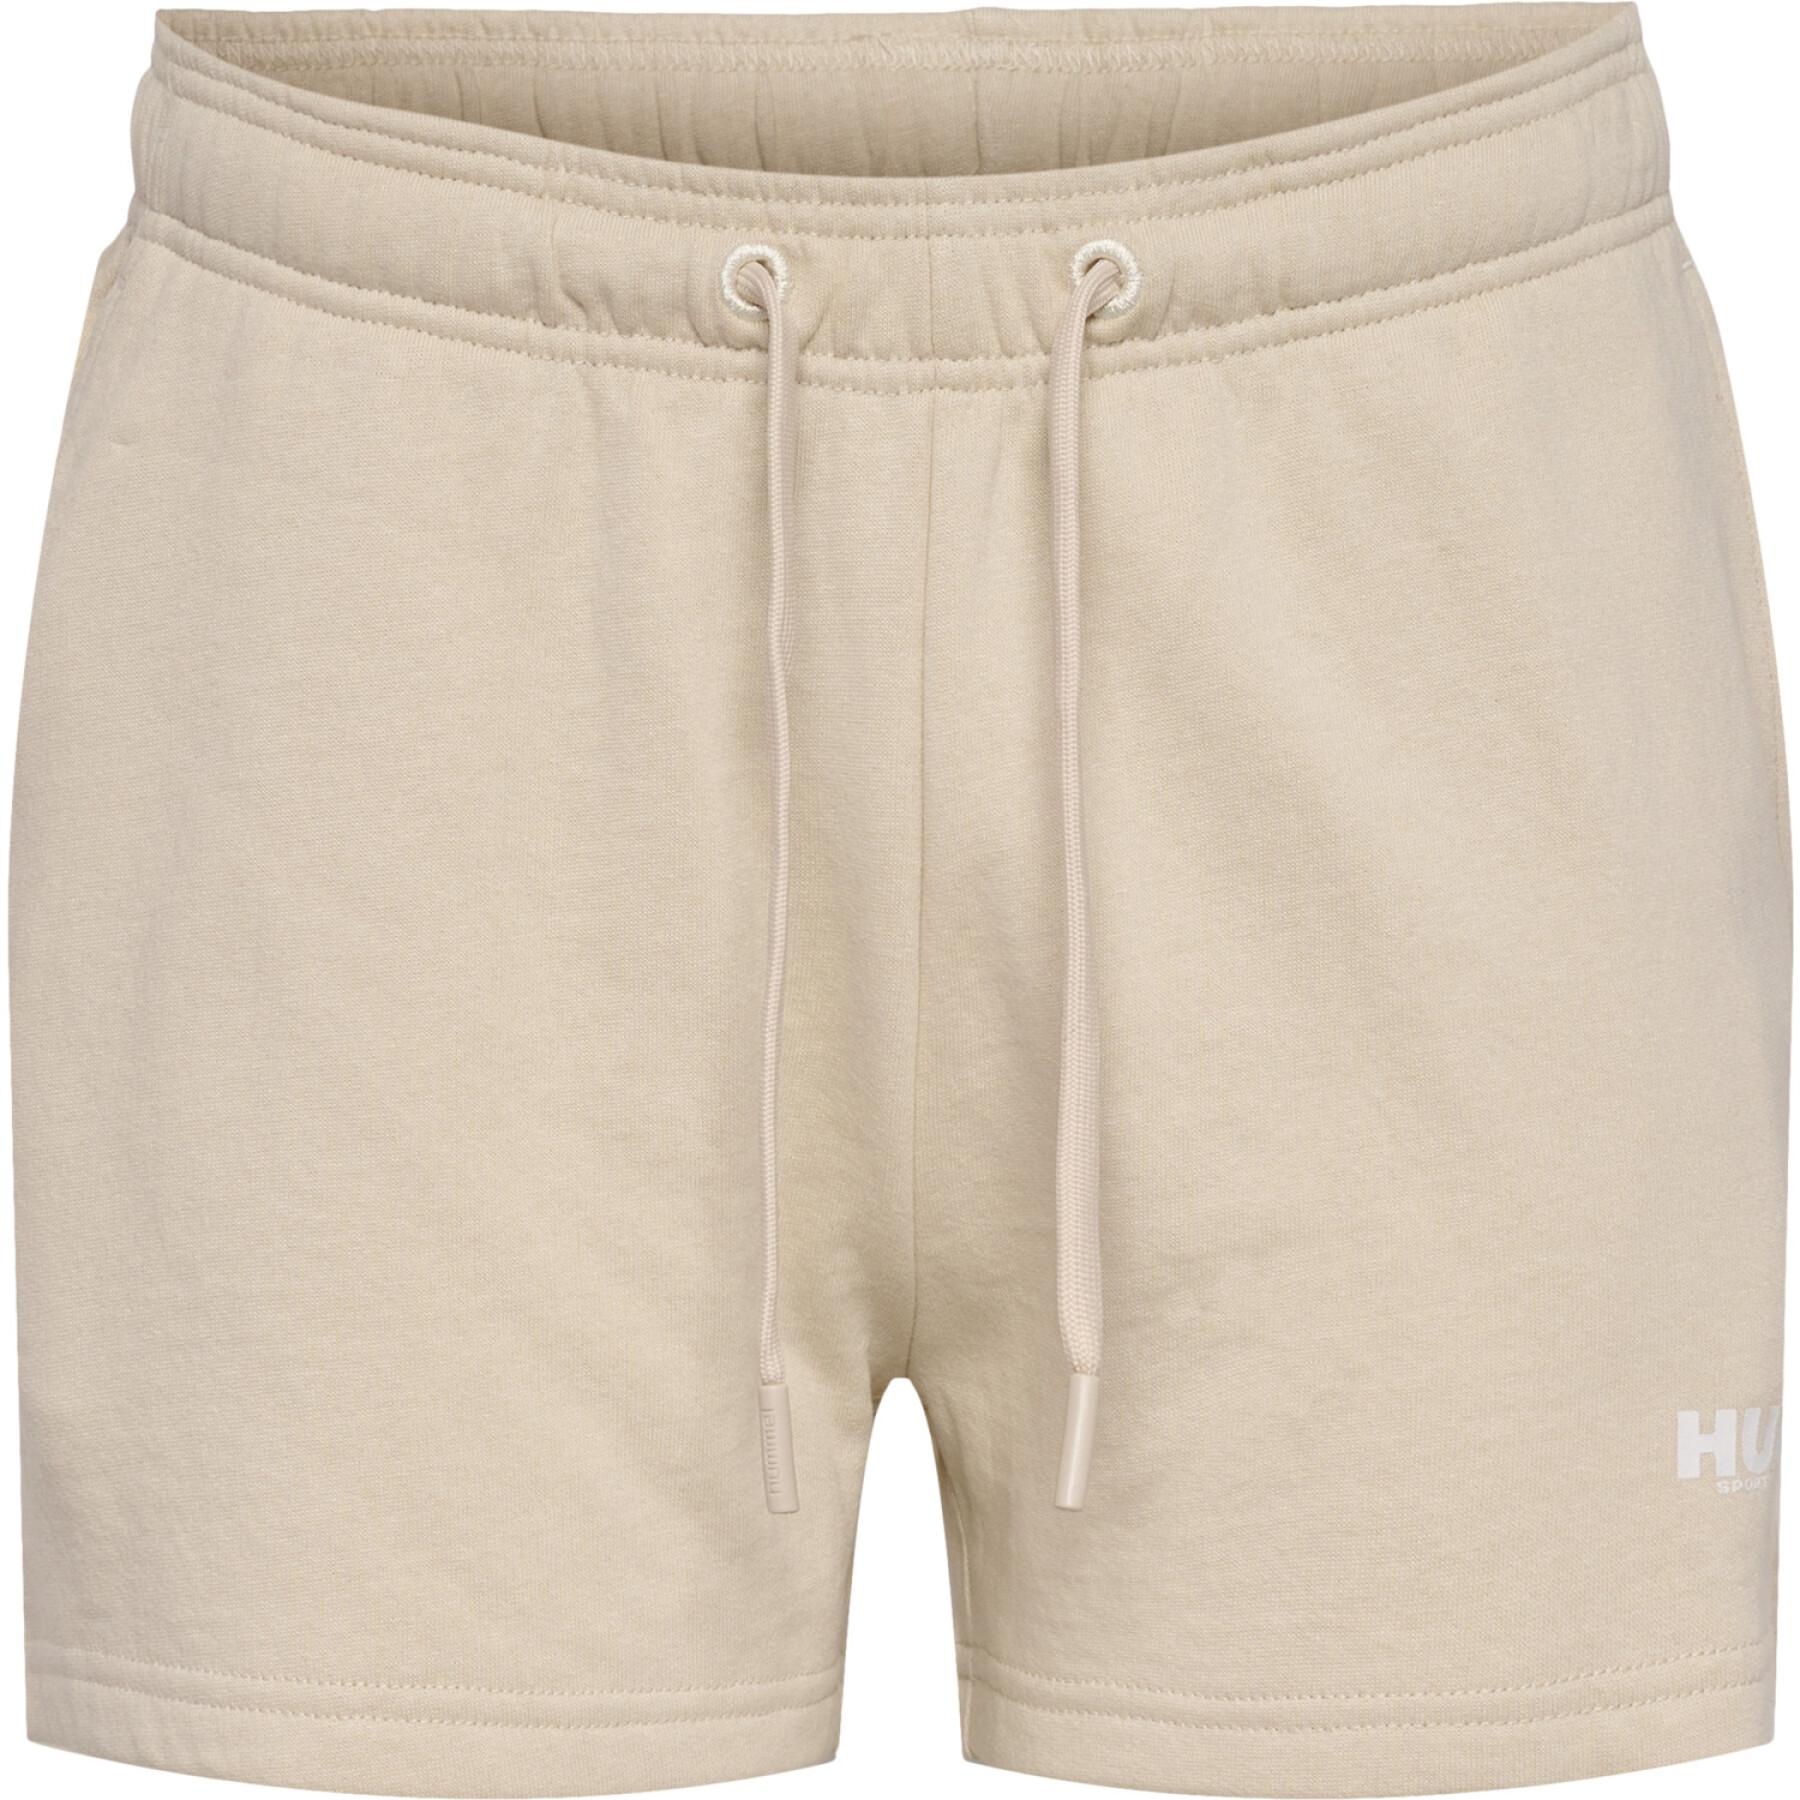 Hummel Hummel Brands Women\'s - - shorts Legacy Lifestyle -